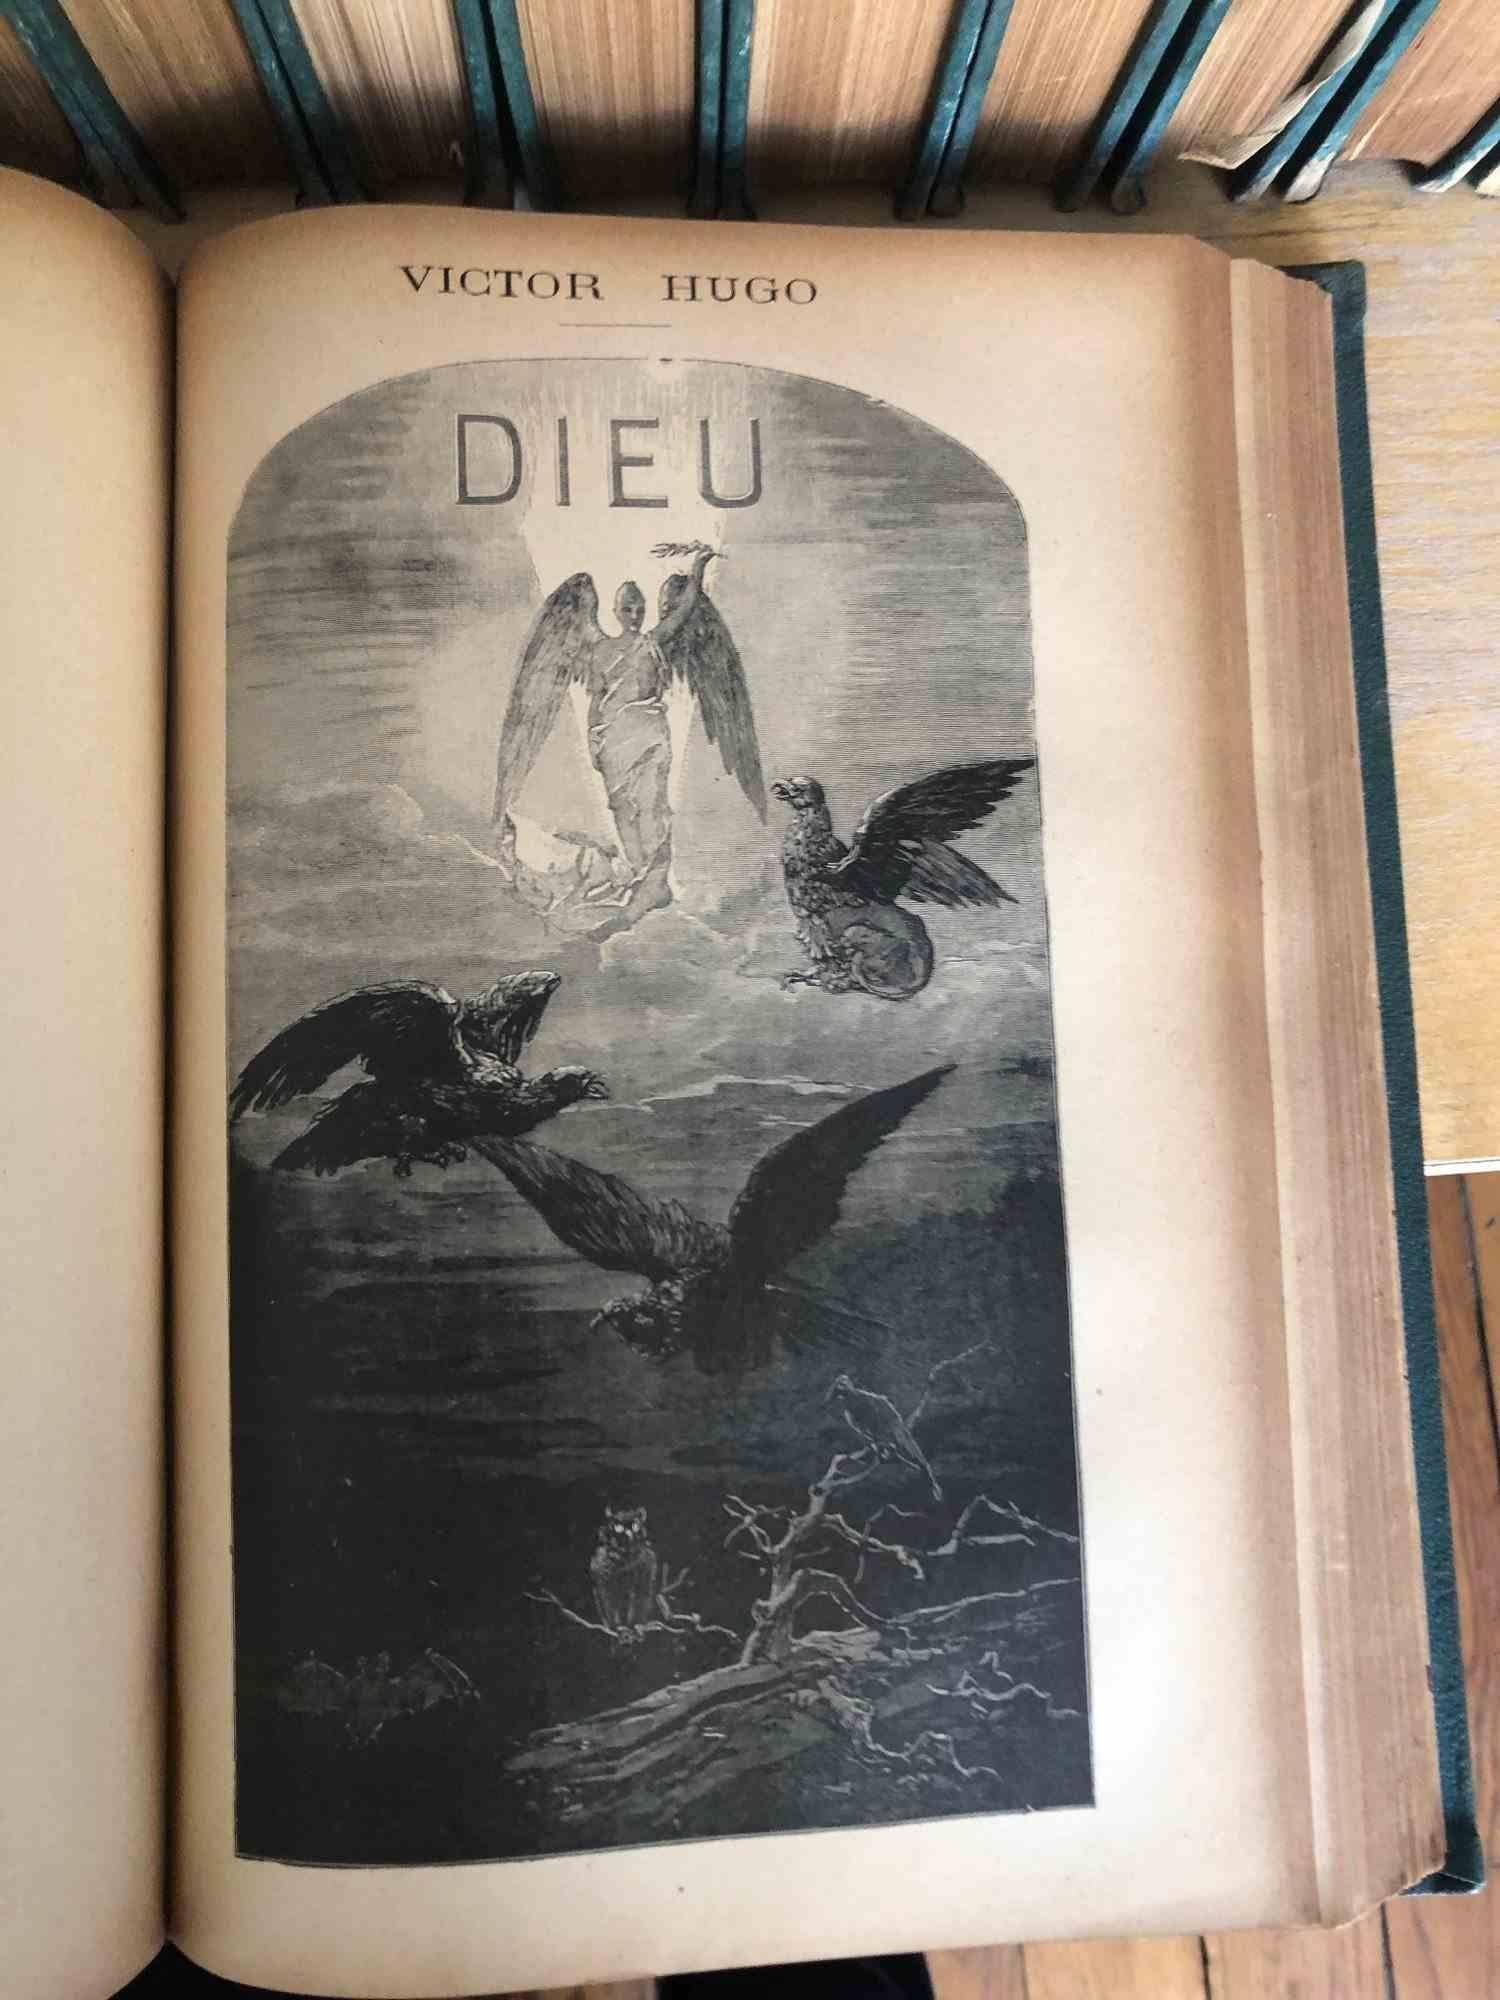 Oeuvres Complètes Illustrées - Rare Book by Victor Hugo - 1902 For Sale 5